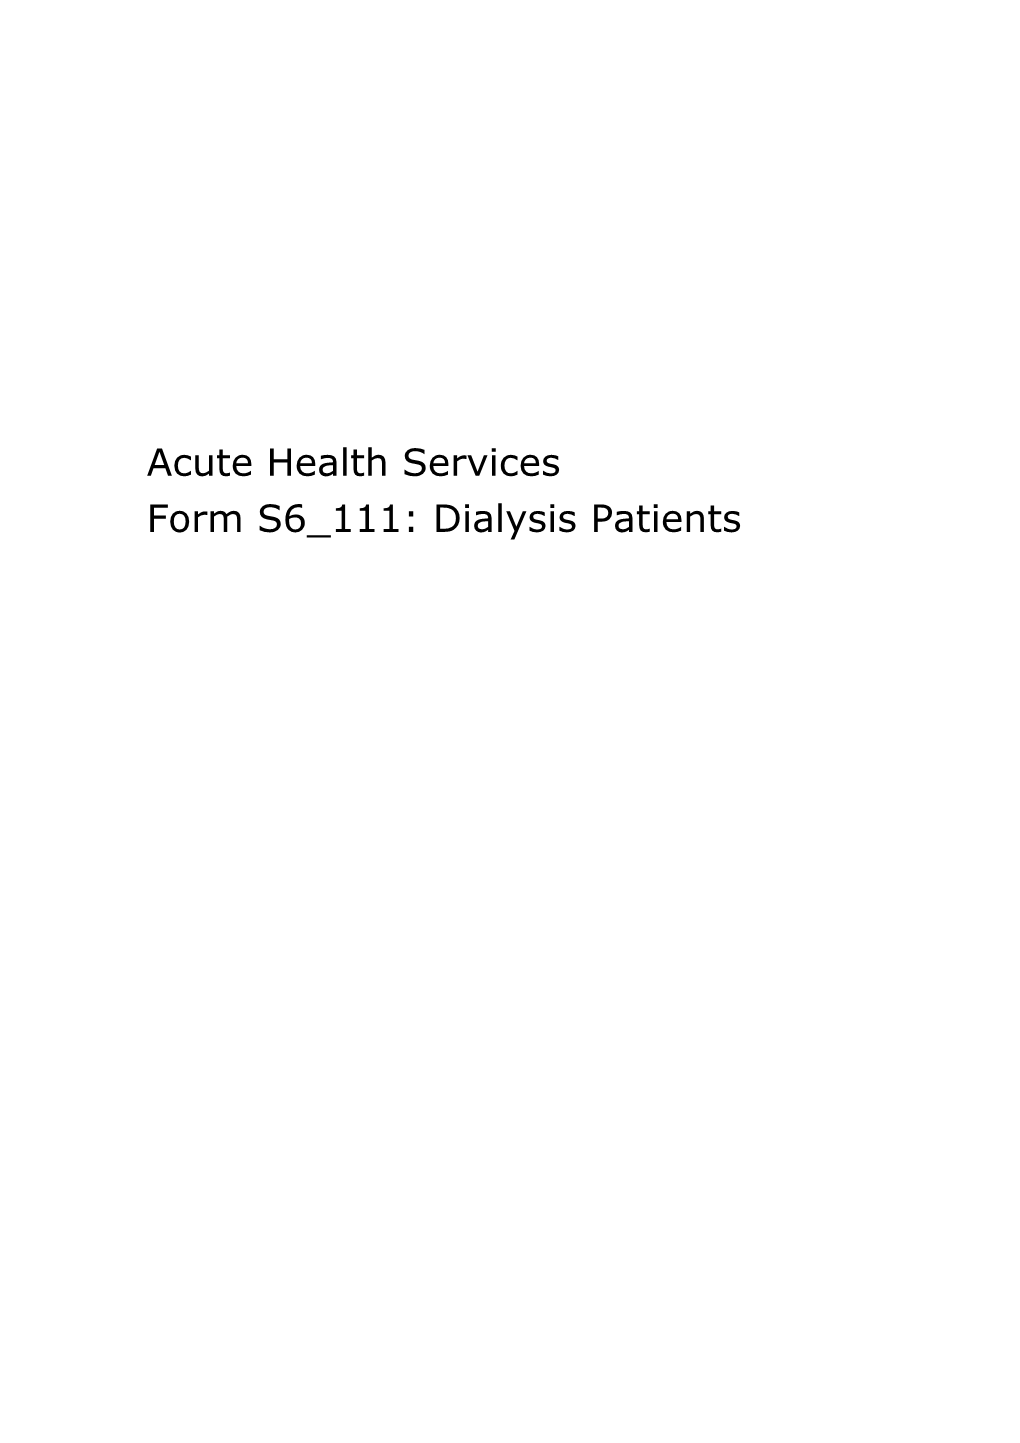 AIMS PH Manual - Acute Health Services s1